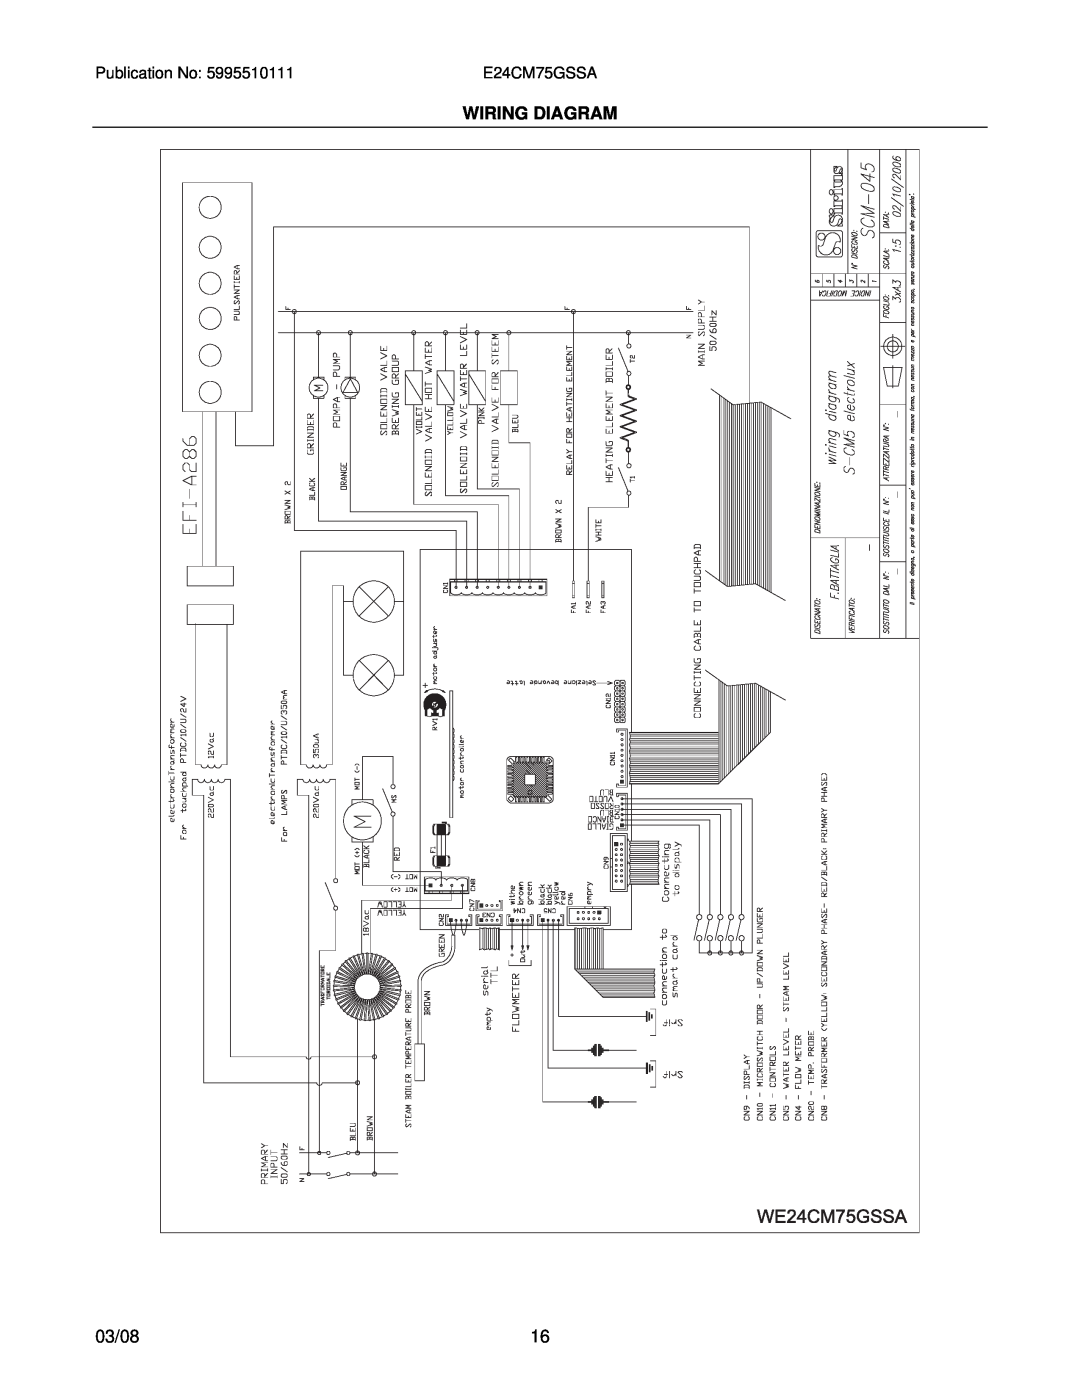 Electrolux E24CM75GSSA installation instructions Wiring Diagram, 03/08 